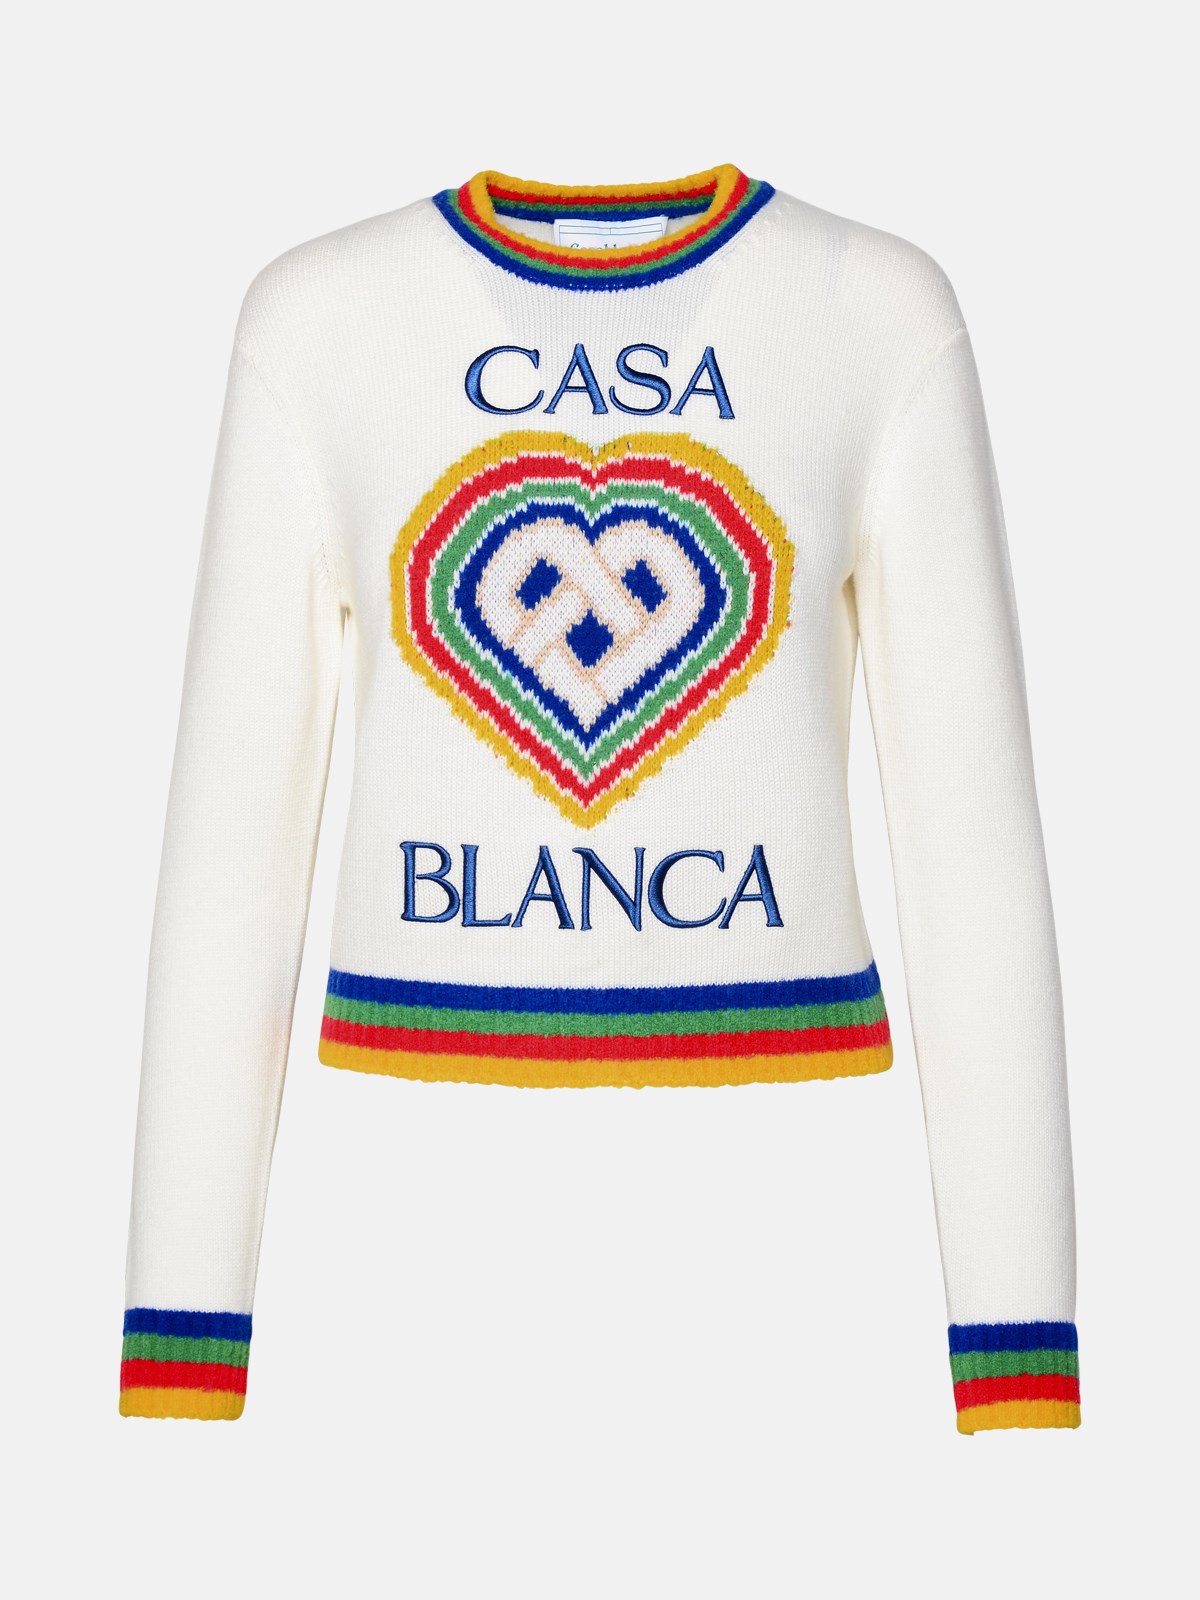 Casablanca Kids' White Virgin Wool Blend Sweater